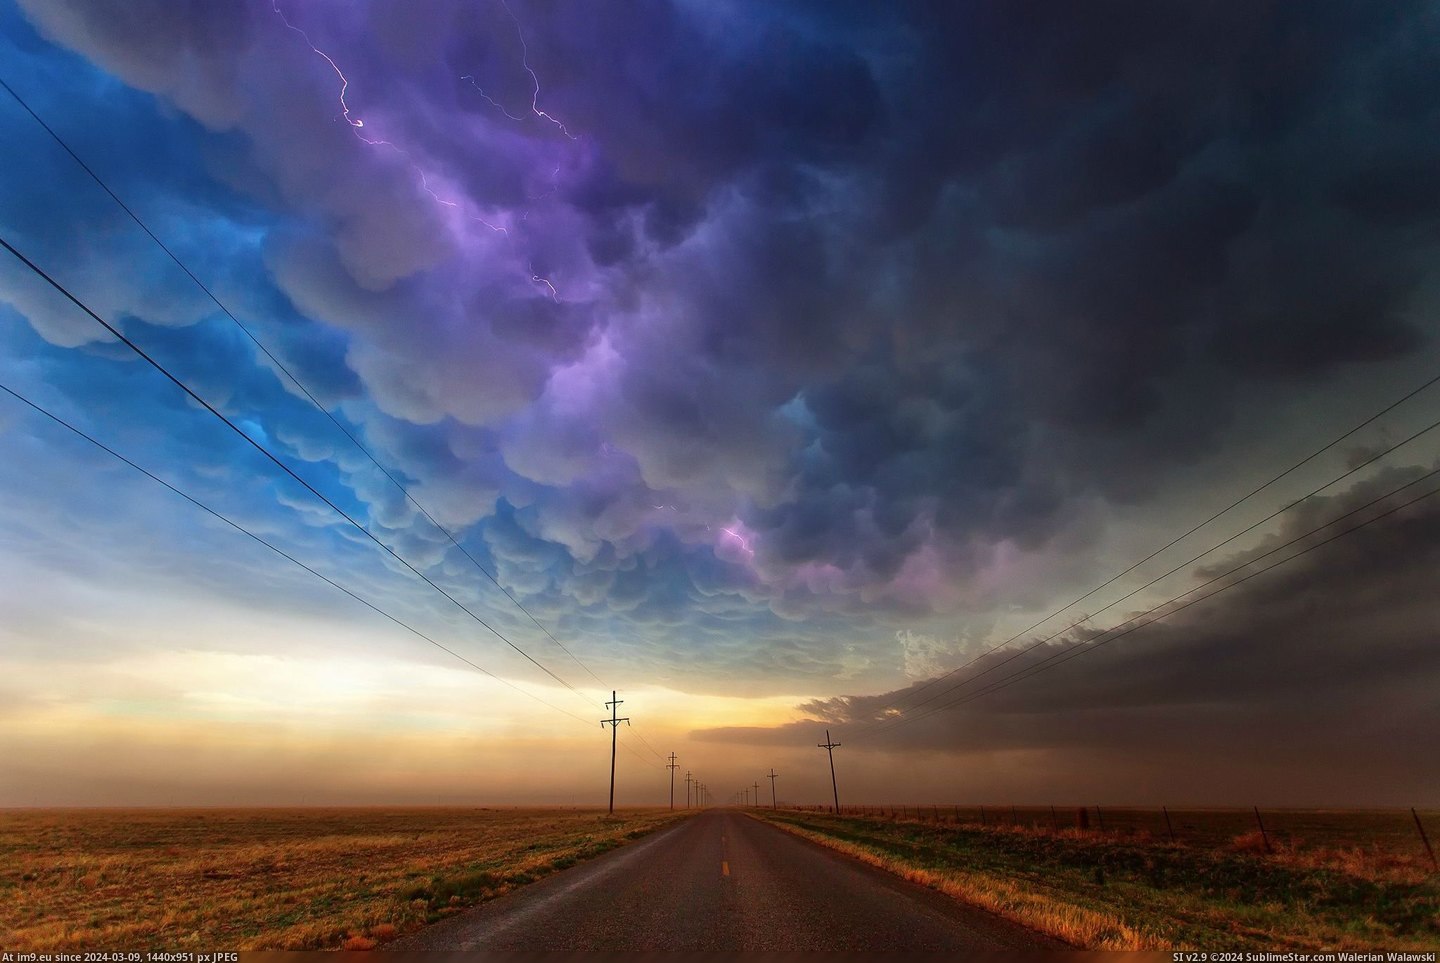 #Texas #Storm #Stunning [Pics] Stunning Storm Over Texas Pic. (Obraz z album My r/PICS favs))